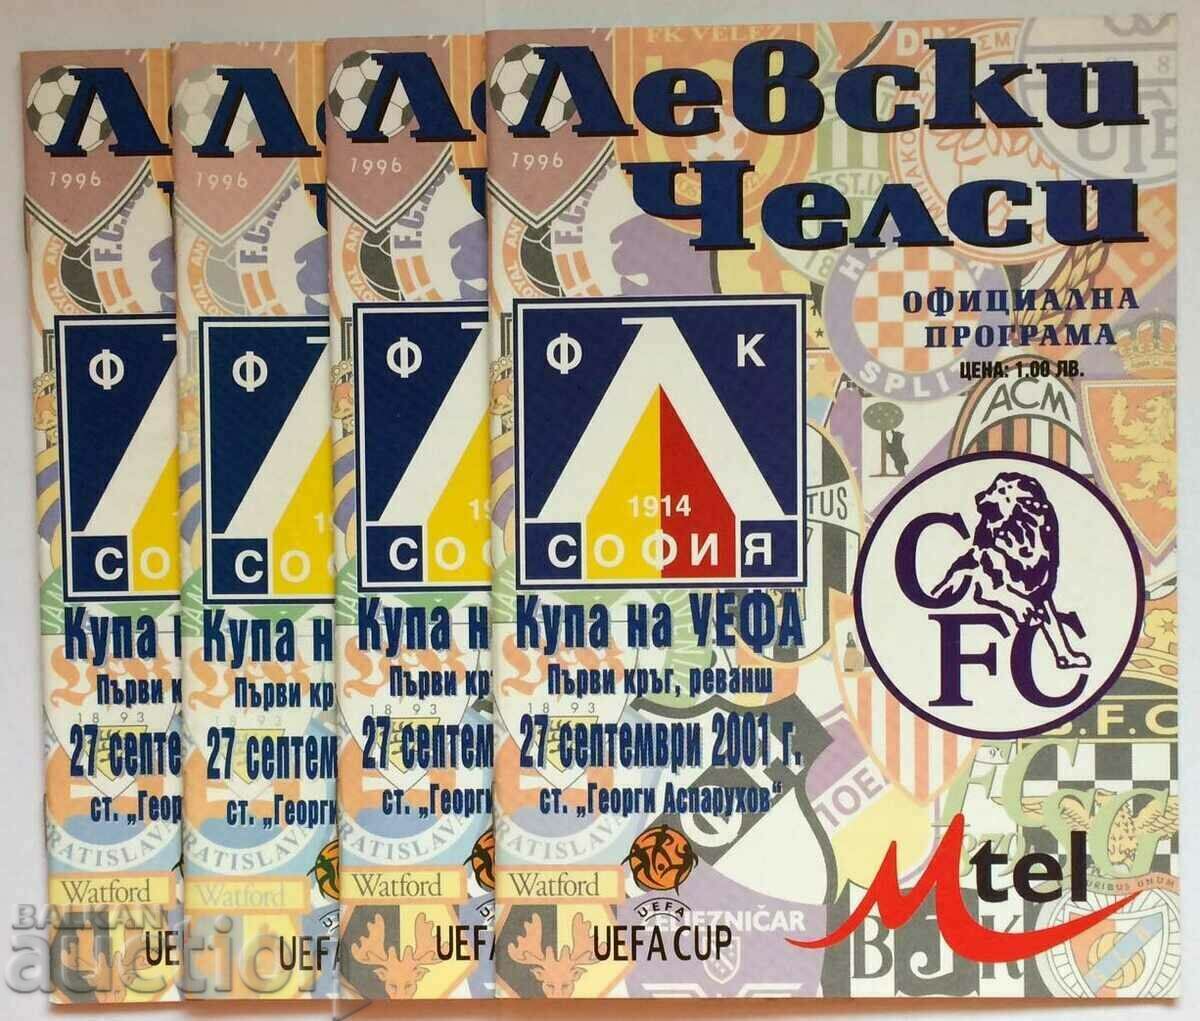 Programul de fotbal Levski-Chelsea 2001 UEFA trei numere